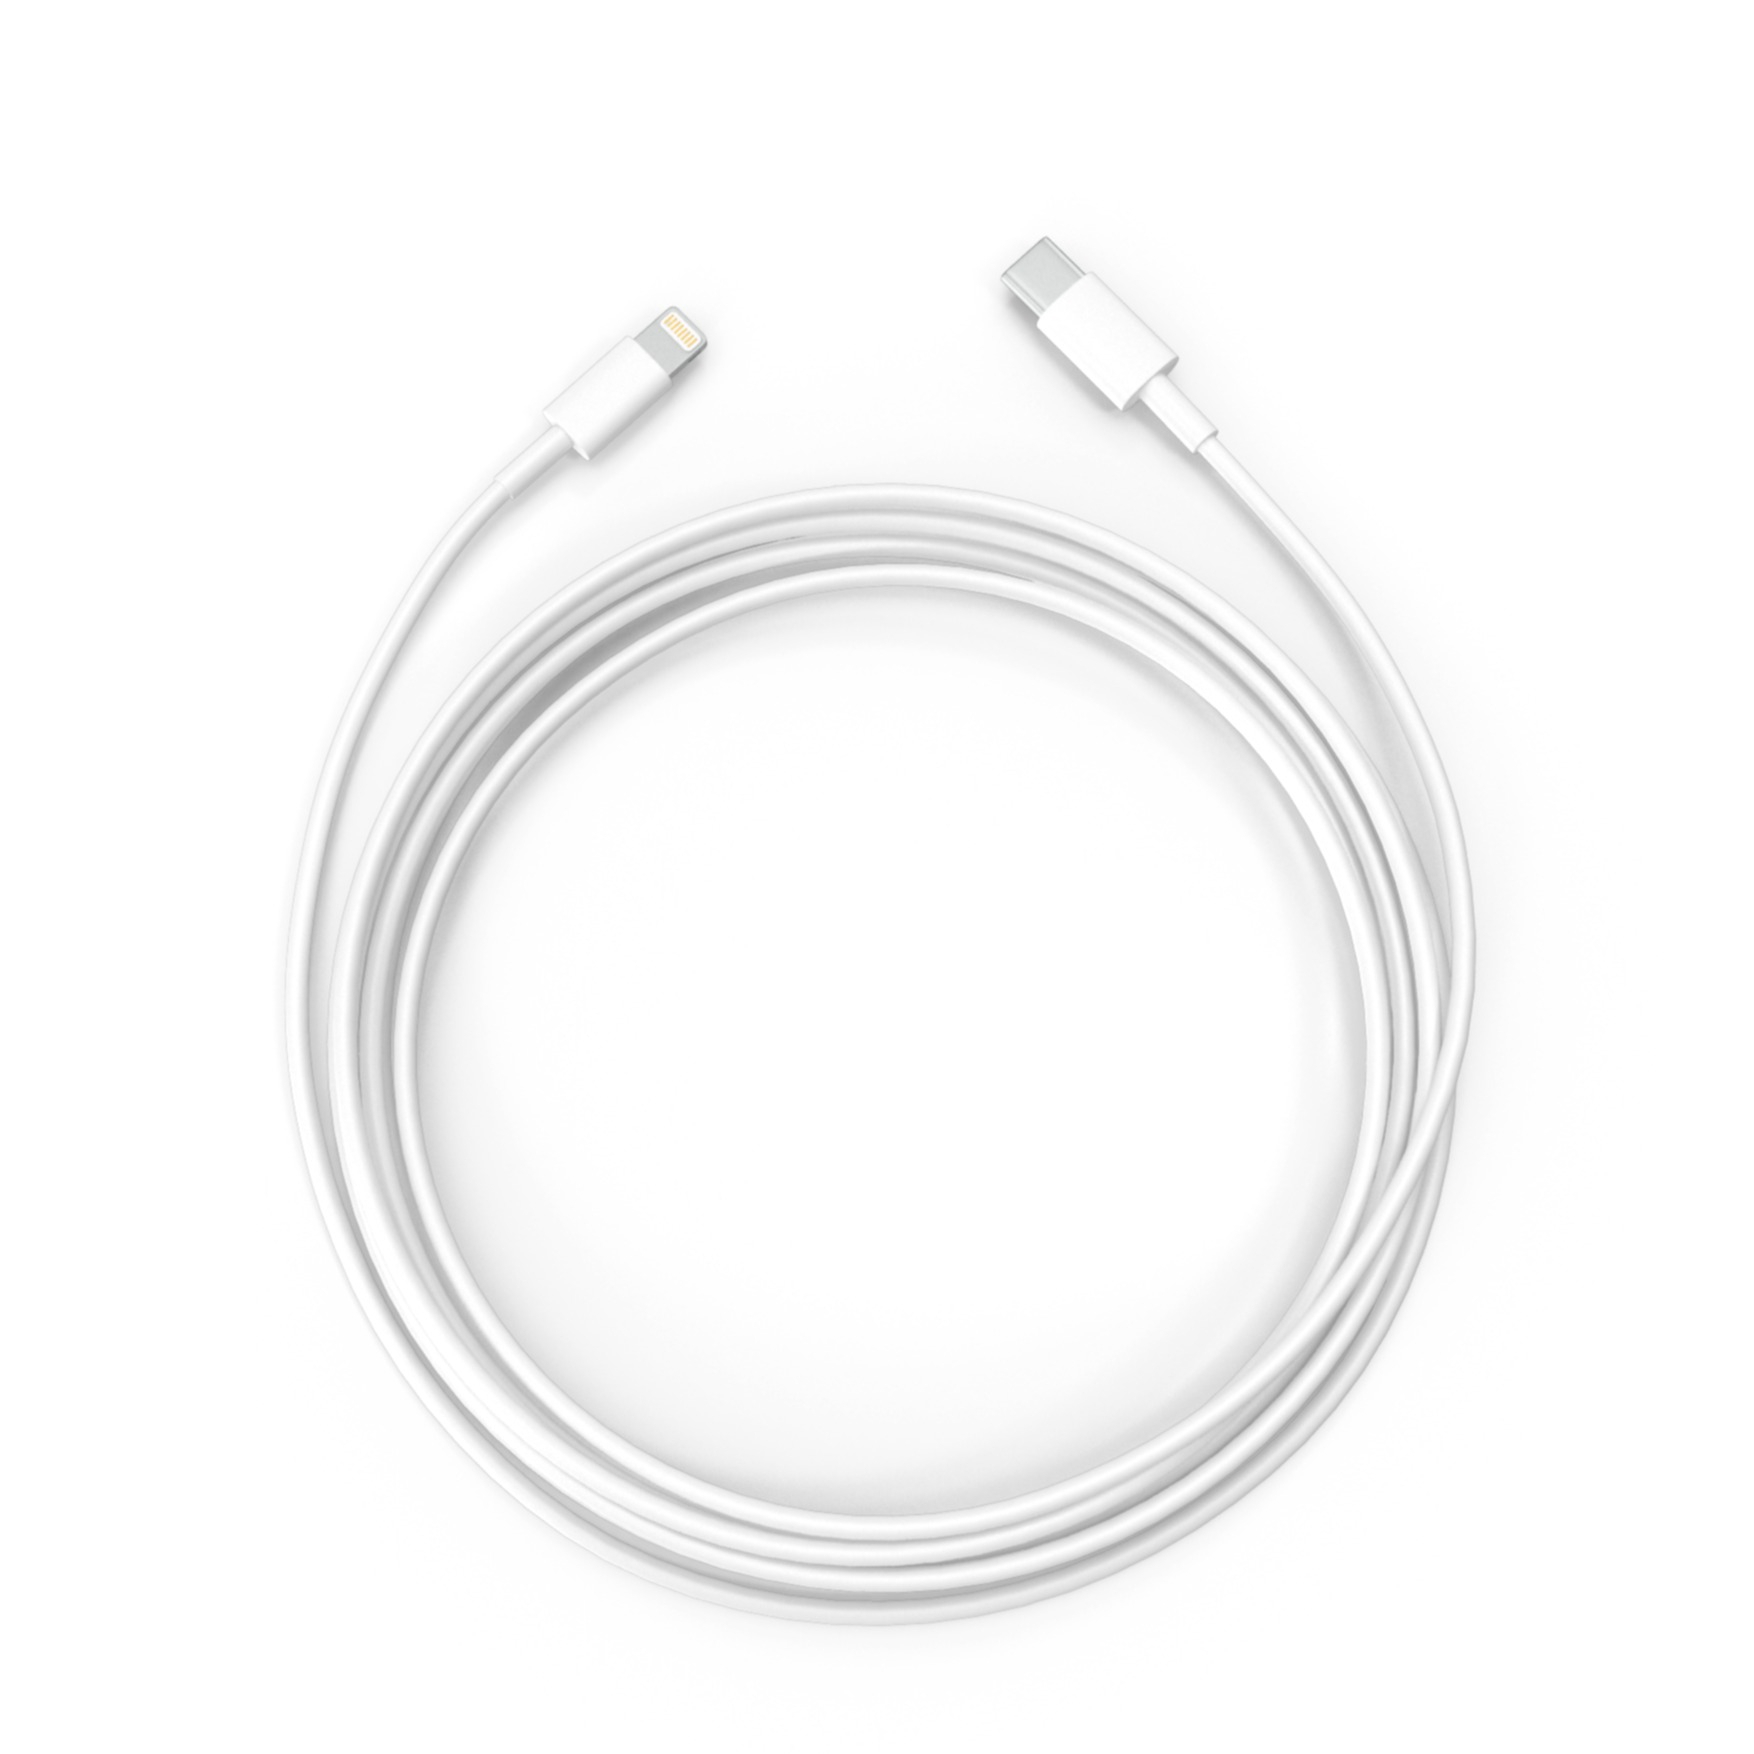 Image of Apple - (1m) iPhone 12 Mini Lightning auf USB C Ladekabel Datenkabel MK0X2ZM/A - Weiss bei Apfelkiste.ch